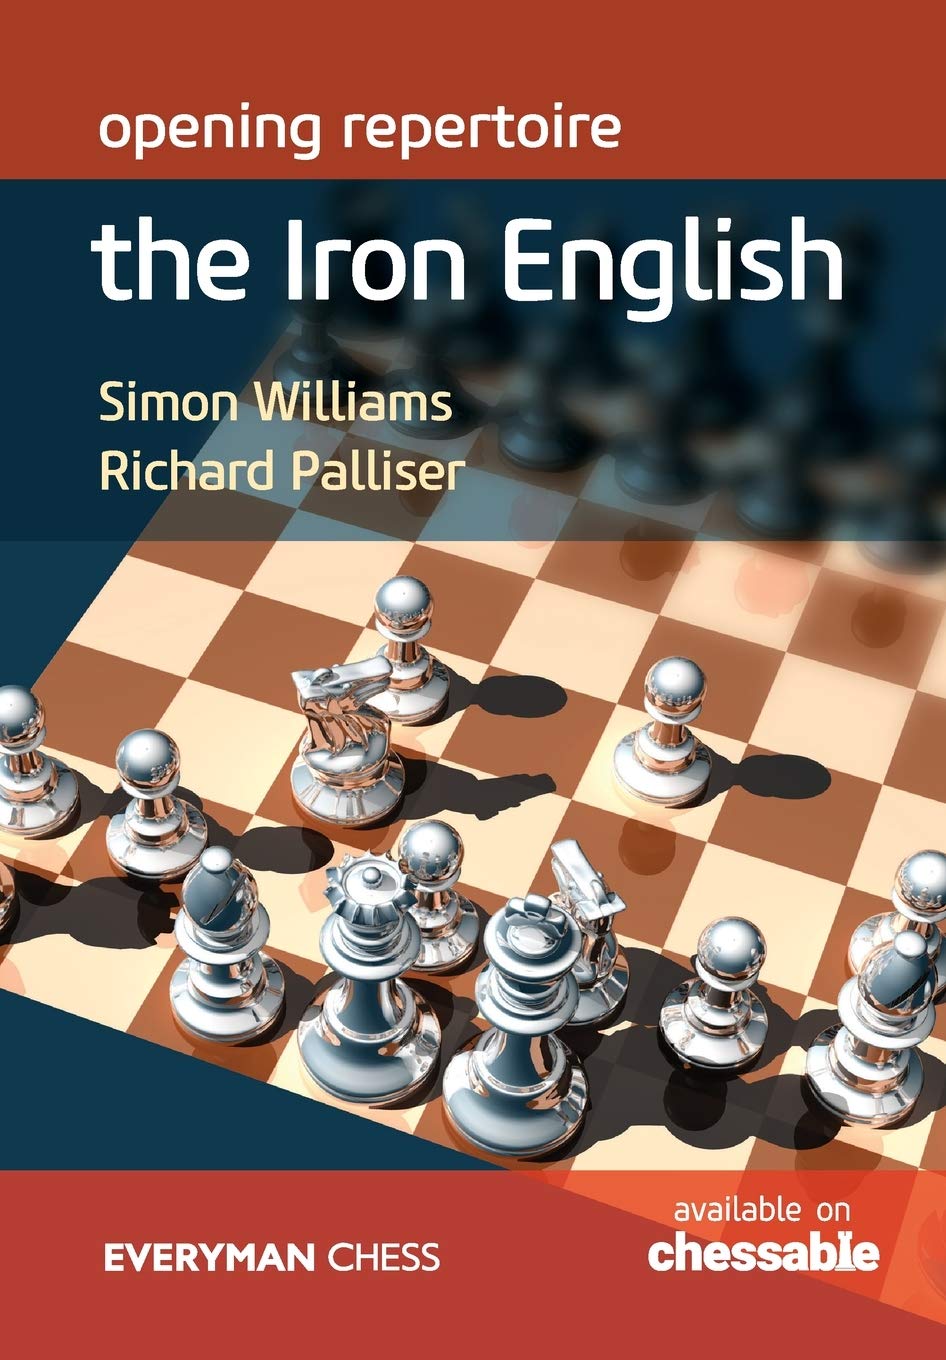 The Iron English, Richard Palliser & Simon Williams, Everyman Chess, 2020, ISBN-13 : 978-1781945803